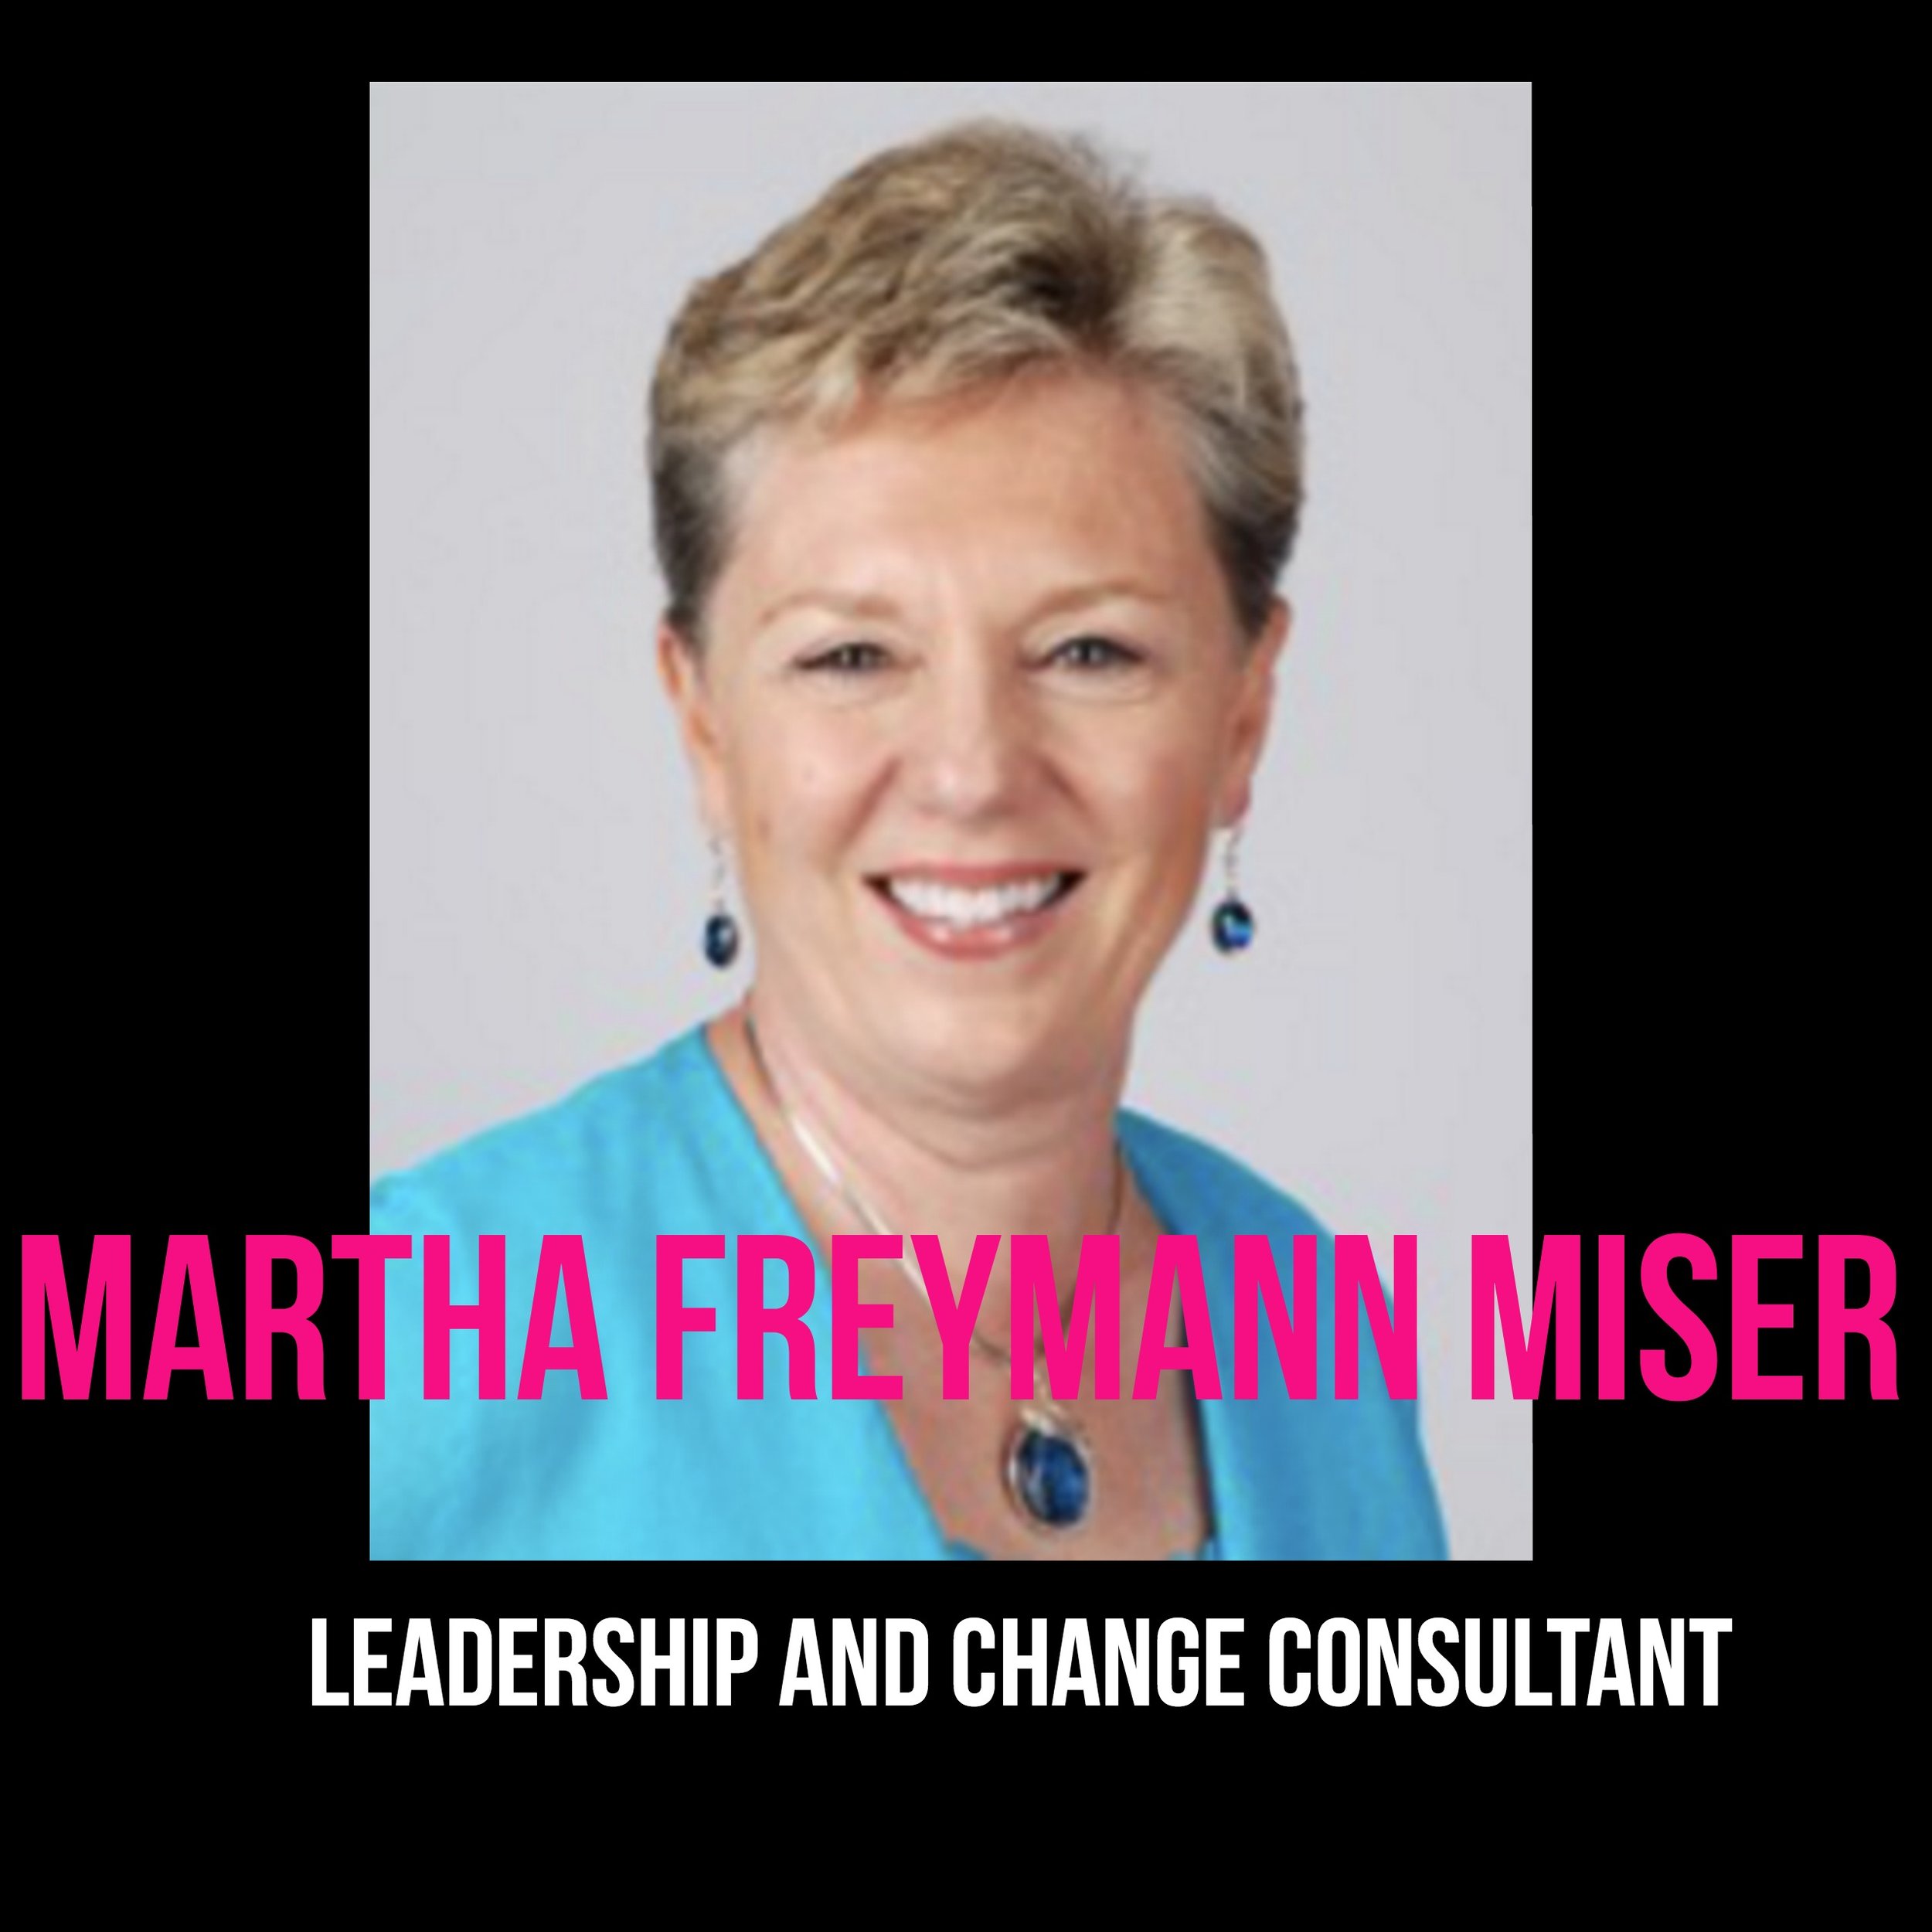 THE JILLS OF ALL TRADES™ Martha Freymann Miser Leadership Change Consultant